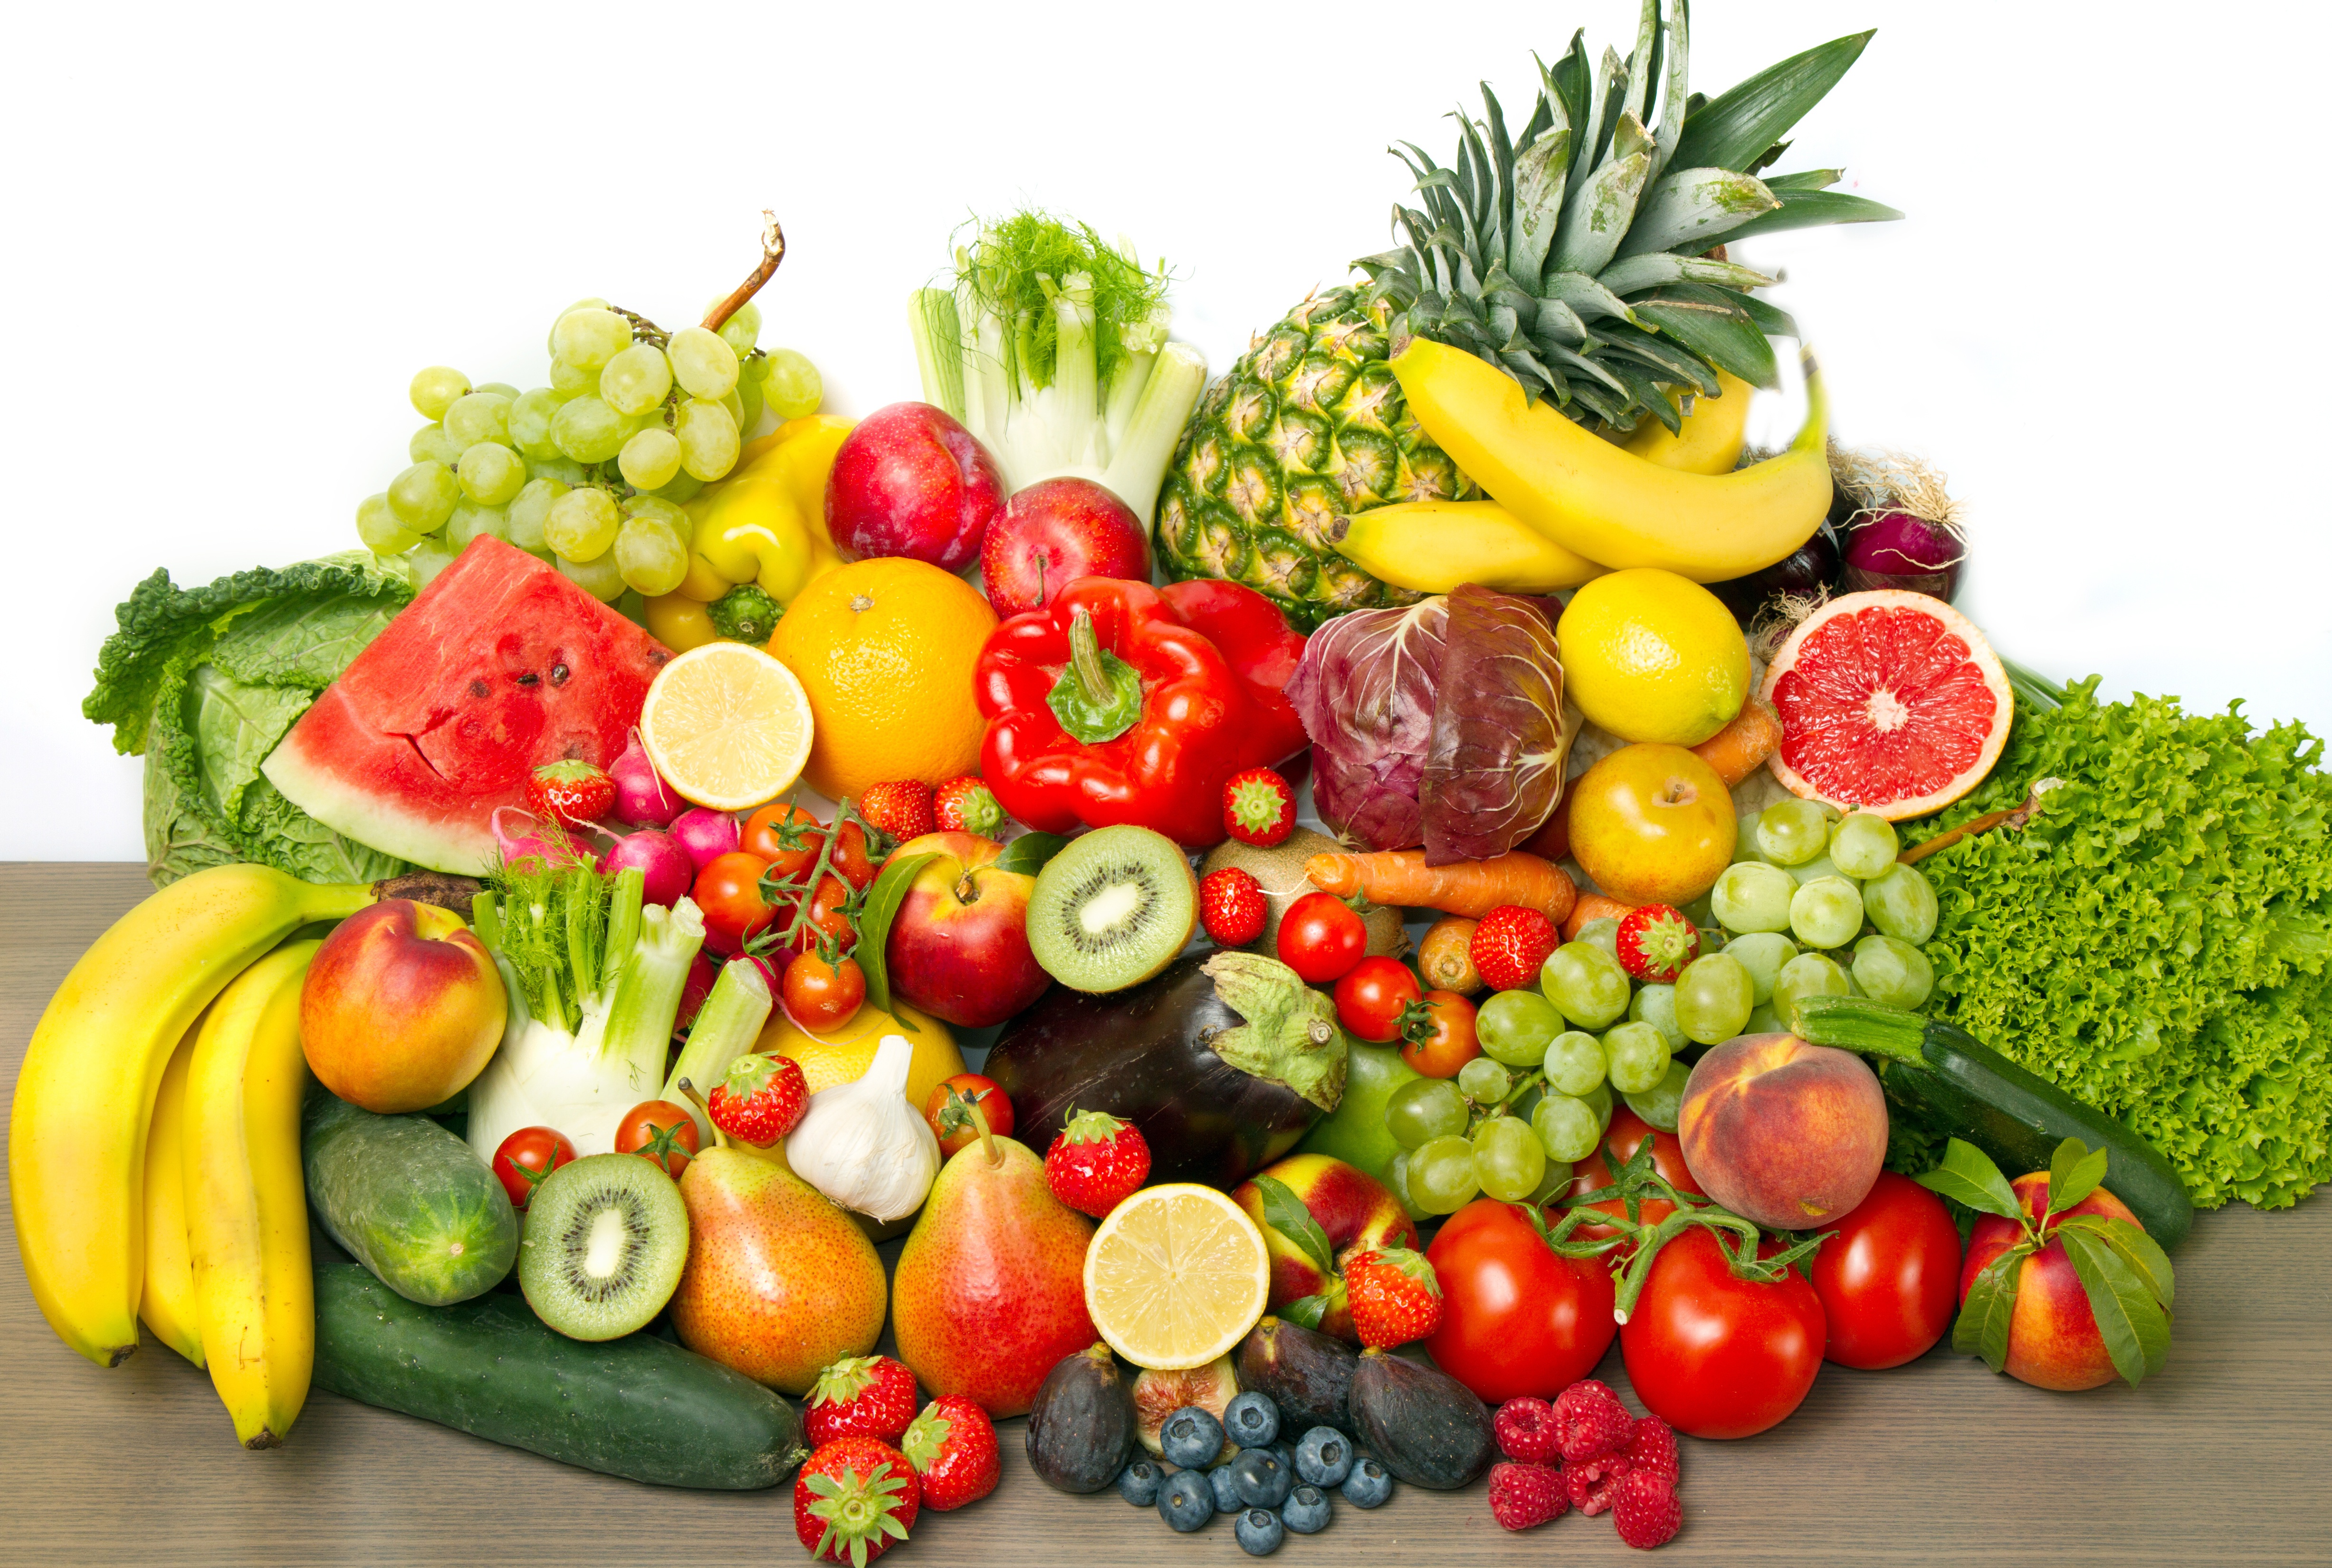 Colourful and crunchy fruit and vegetables can. Овощи и фрукты. Фрукт. Овощи, фрукты, ягоды. Красивые овощи.